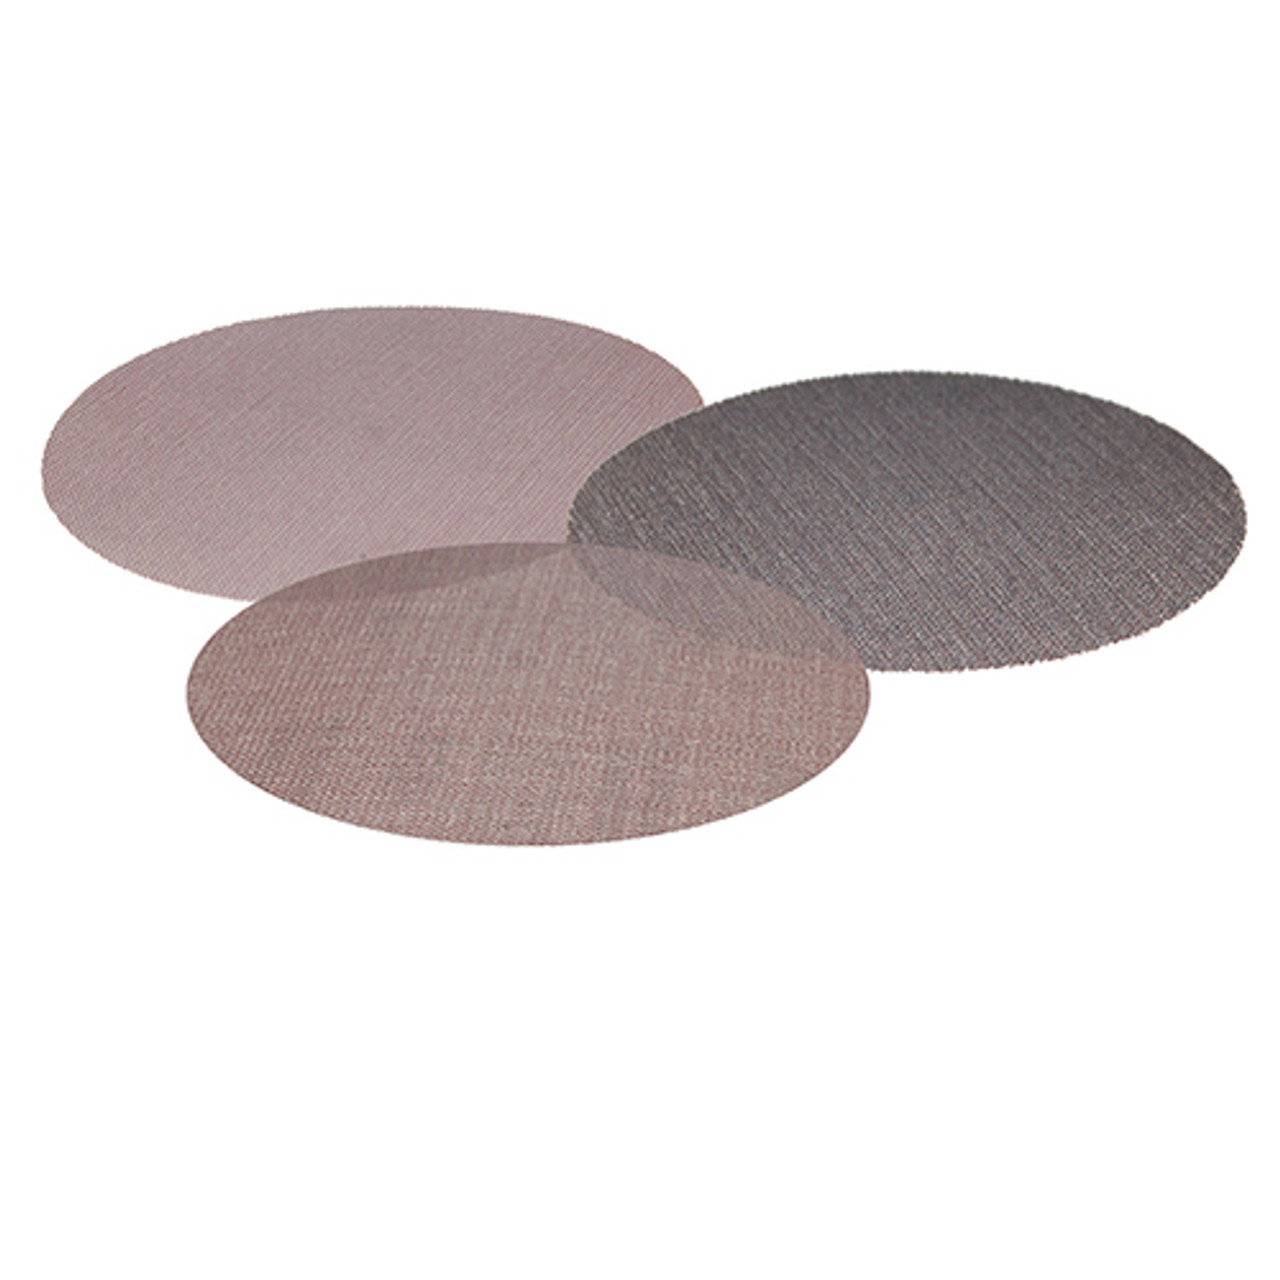 Klingspor Abrasives Klingnet, Aluminum Oxide, Hook & Loop, 5" Discs, 10pk Combo